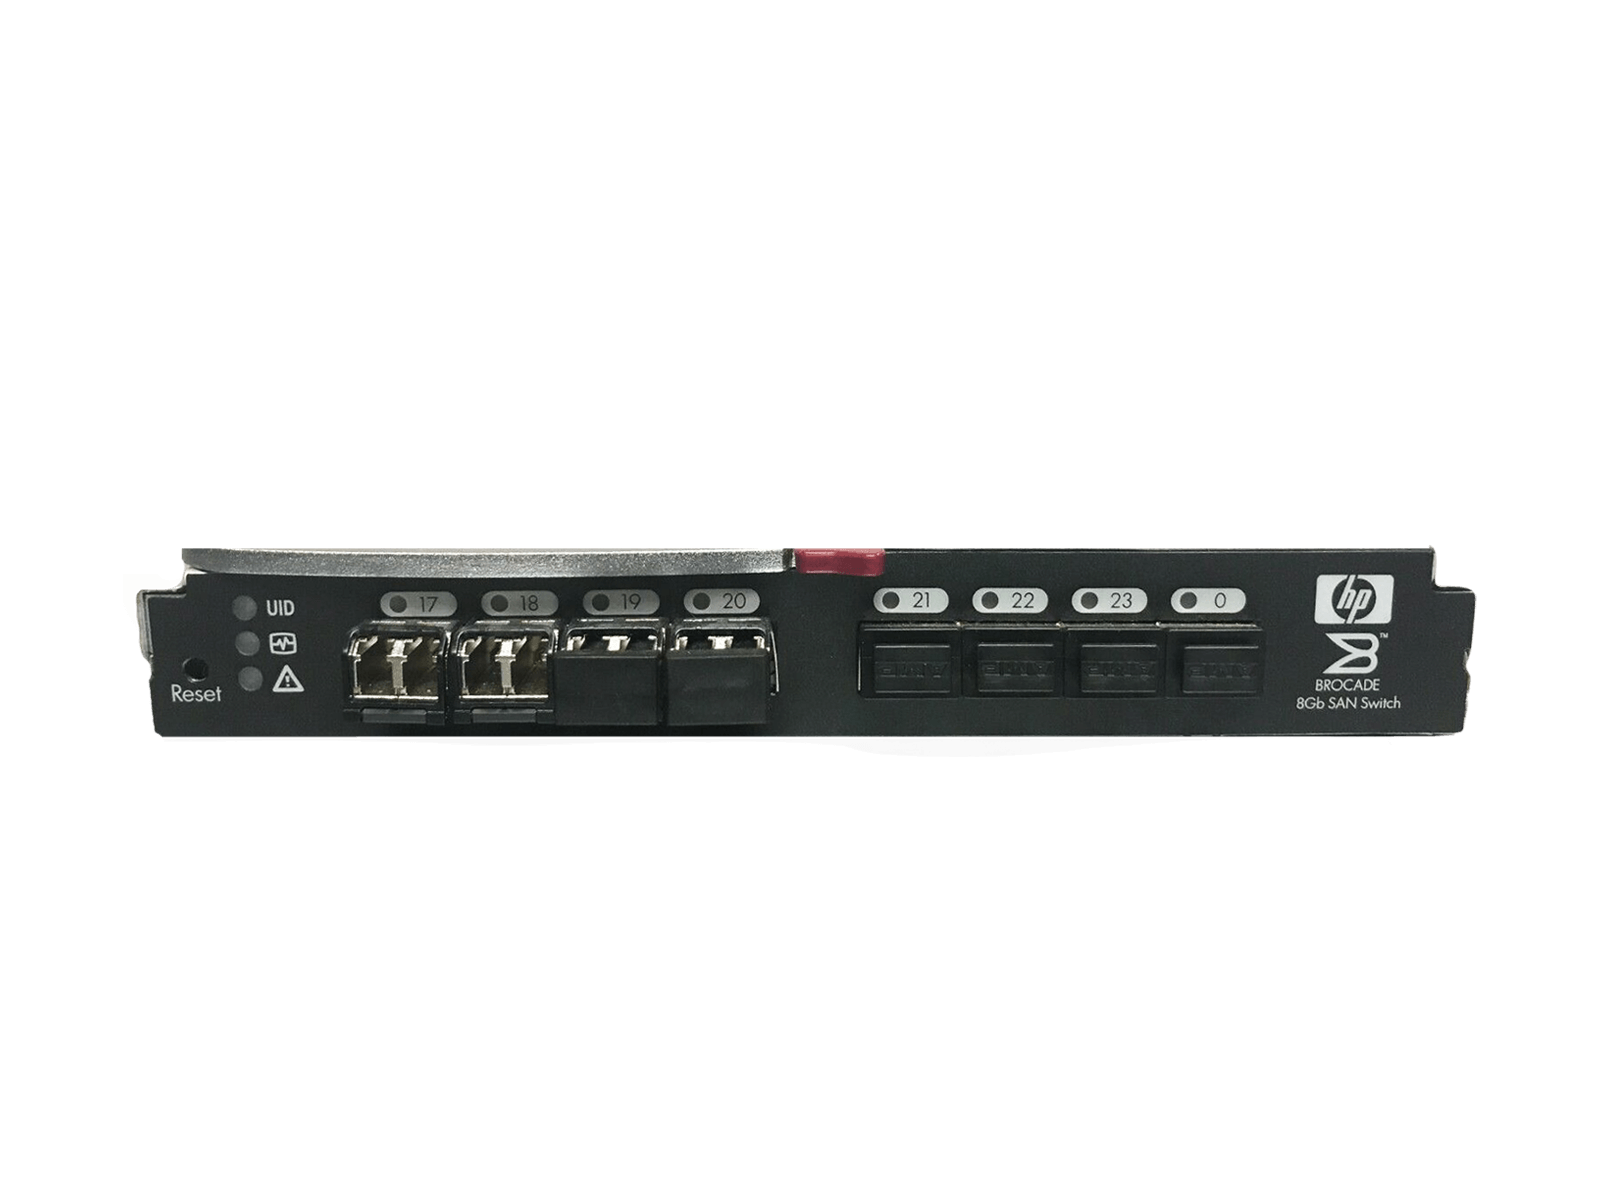 HP AJ821A B Series 8/24c Brocade SAN Switch for BladeSystem C-Class 489865-001.